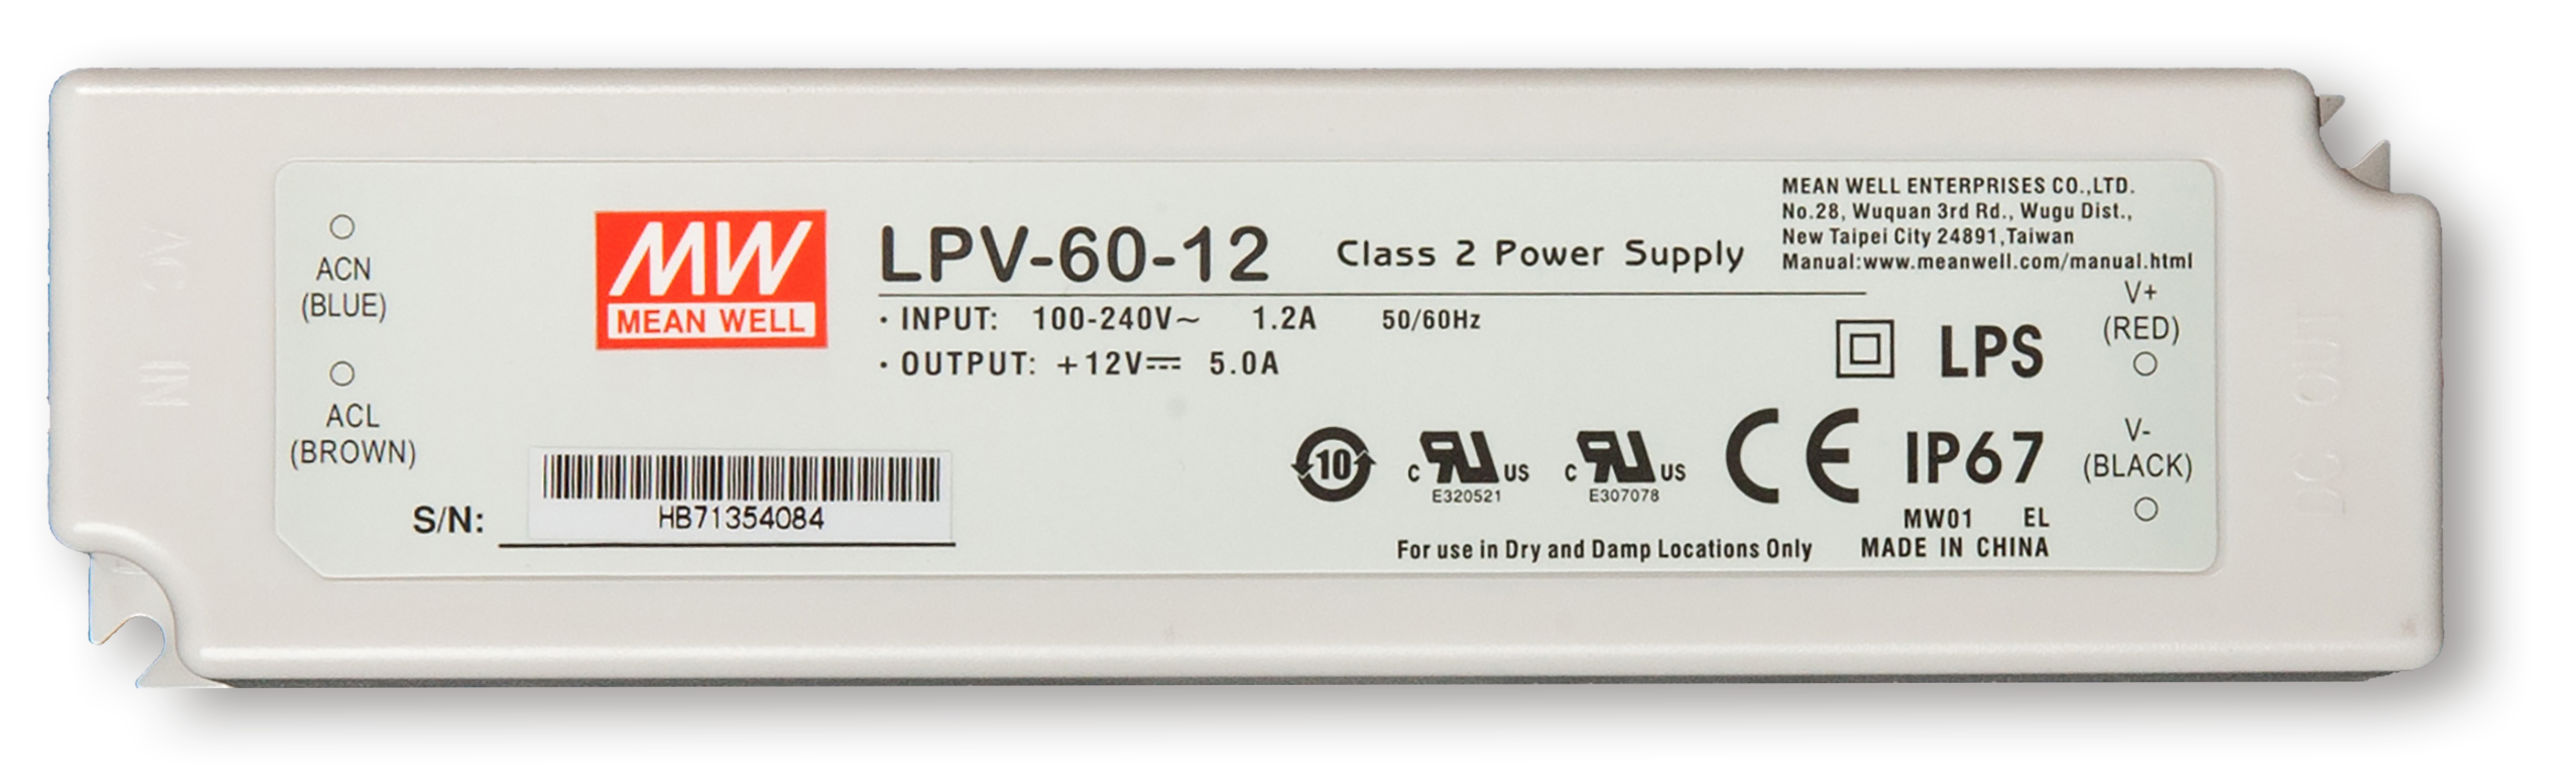 LPV-60-12